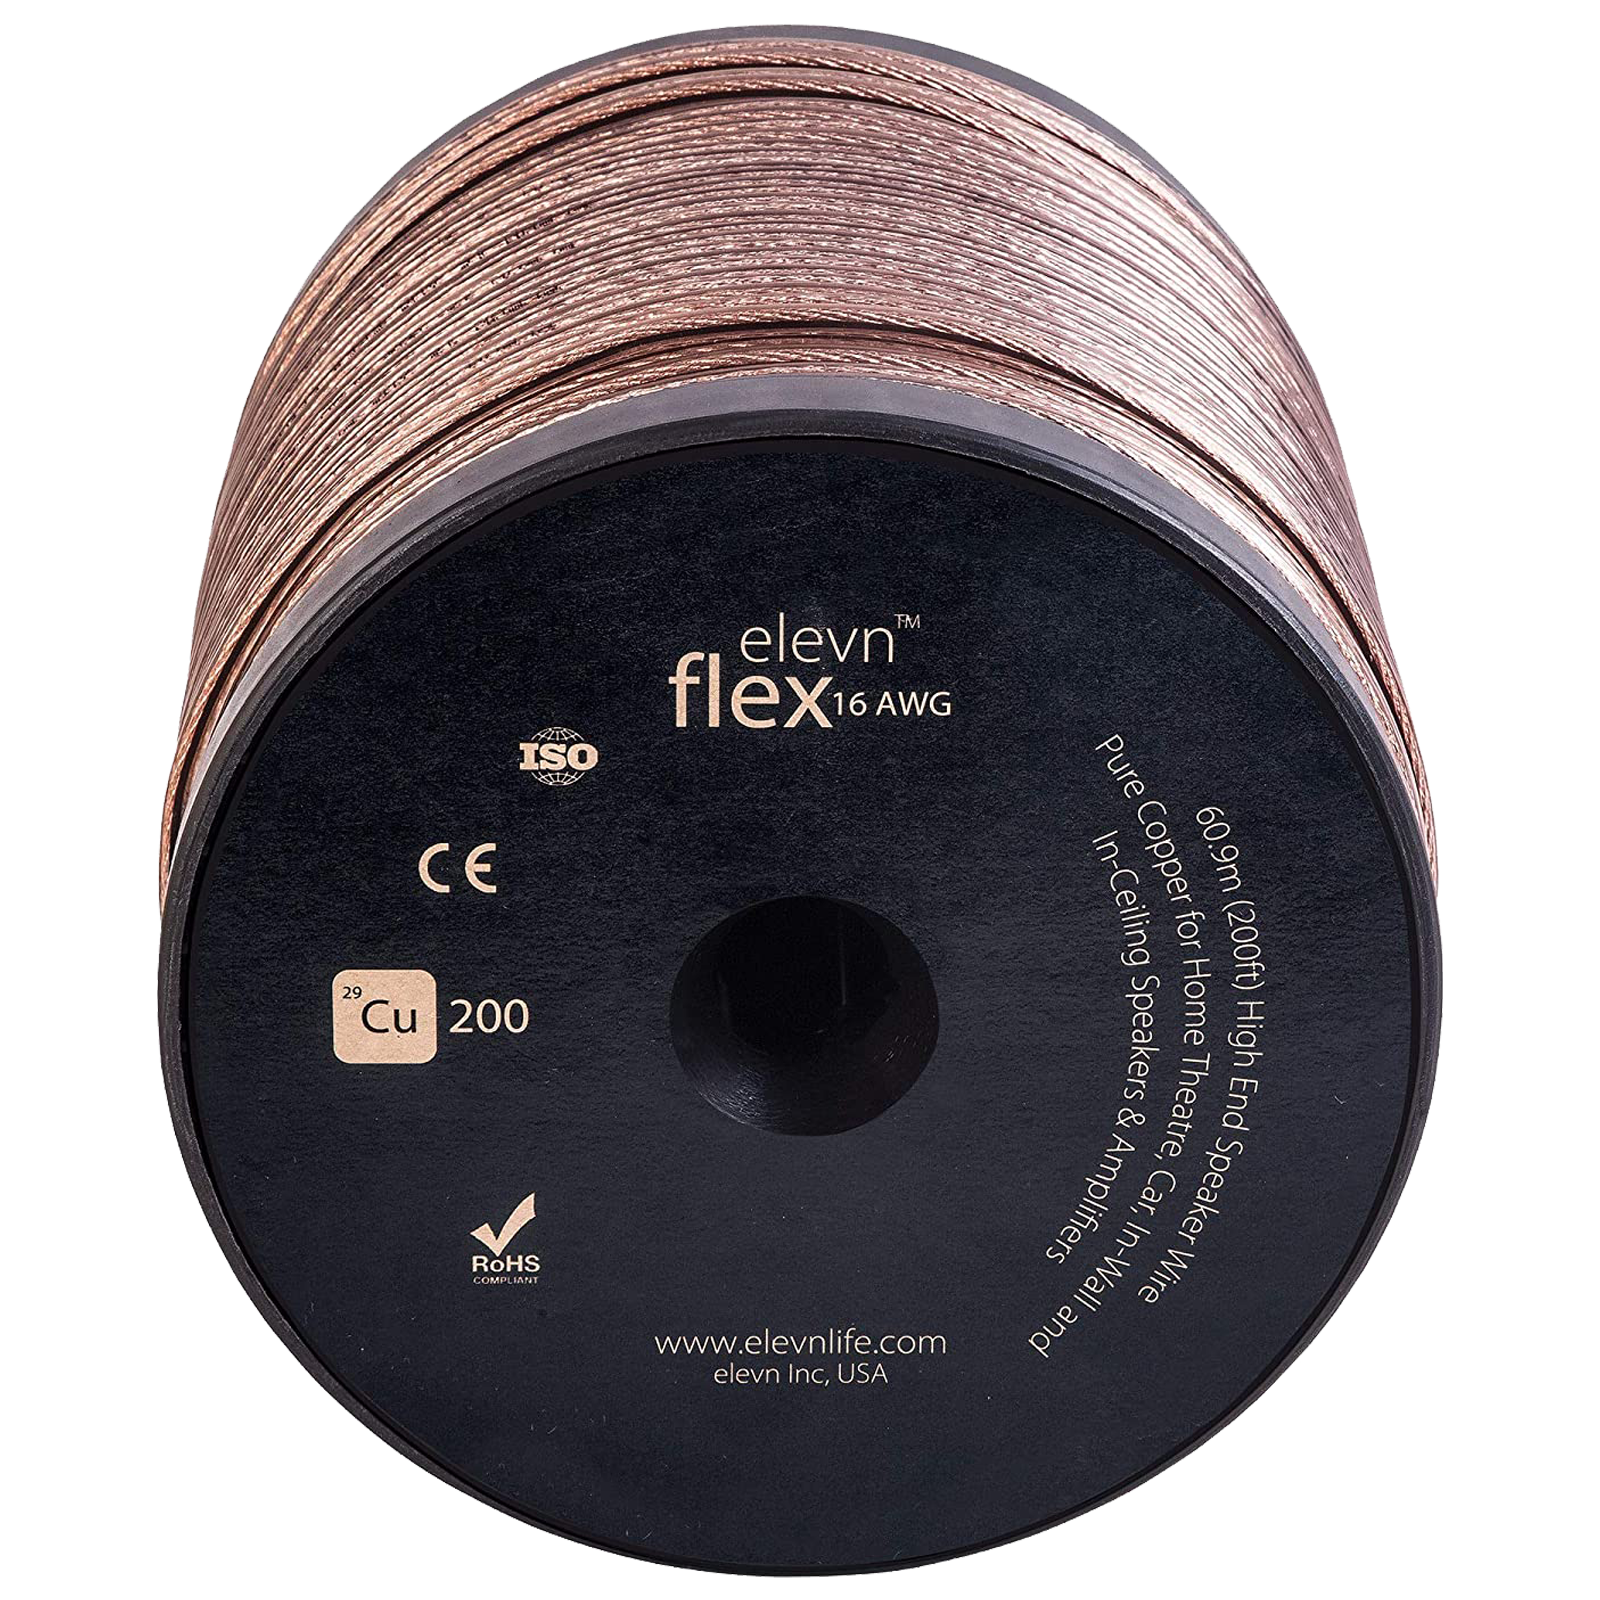 Elevn Copper 60.96 Meter Composite Audio Left and Right to Composite Audio Left and Right Digital Audio Connector (Audiophile Sound, CU_200, Gold)_1